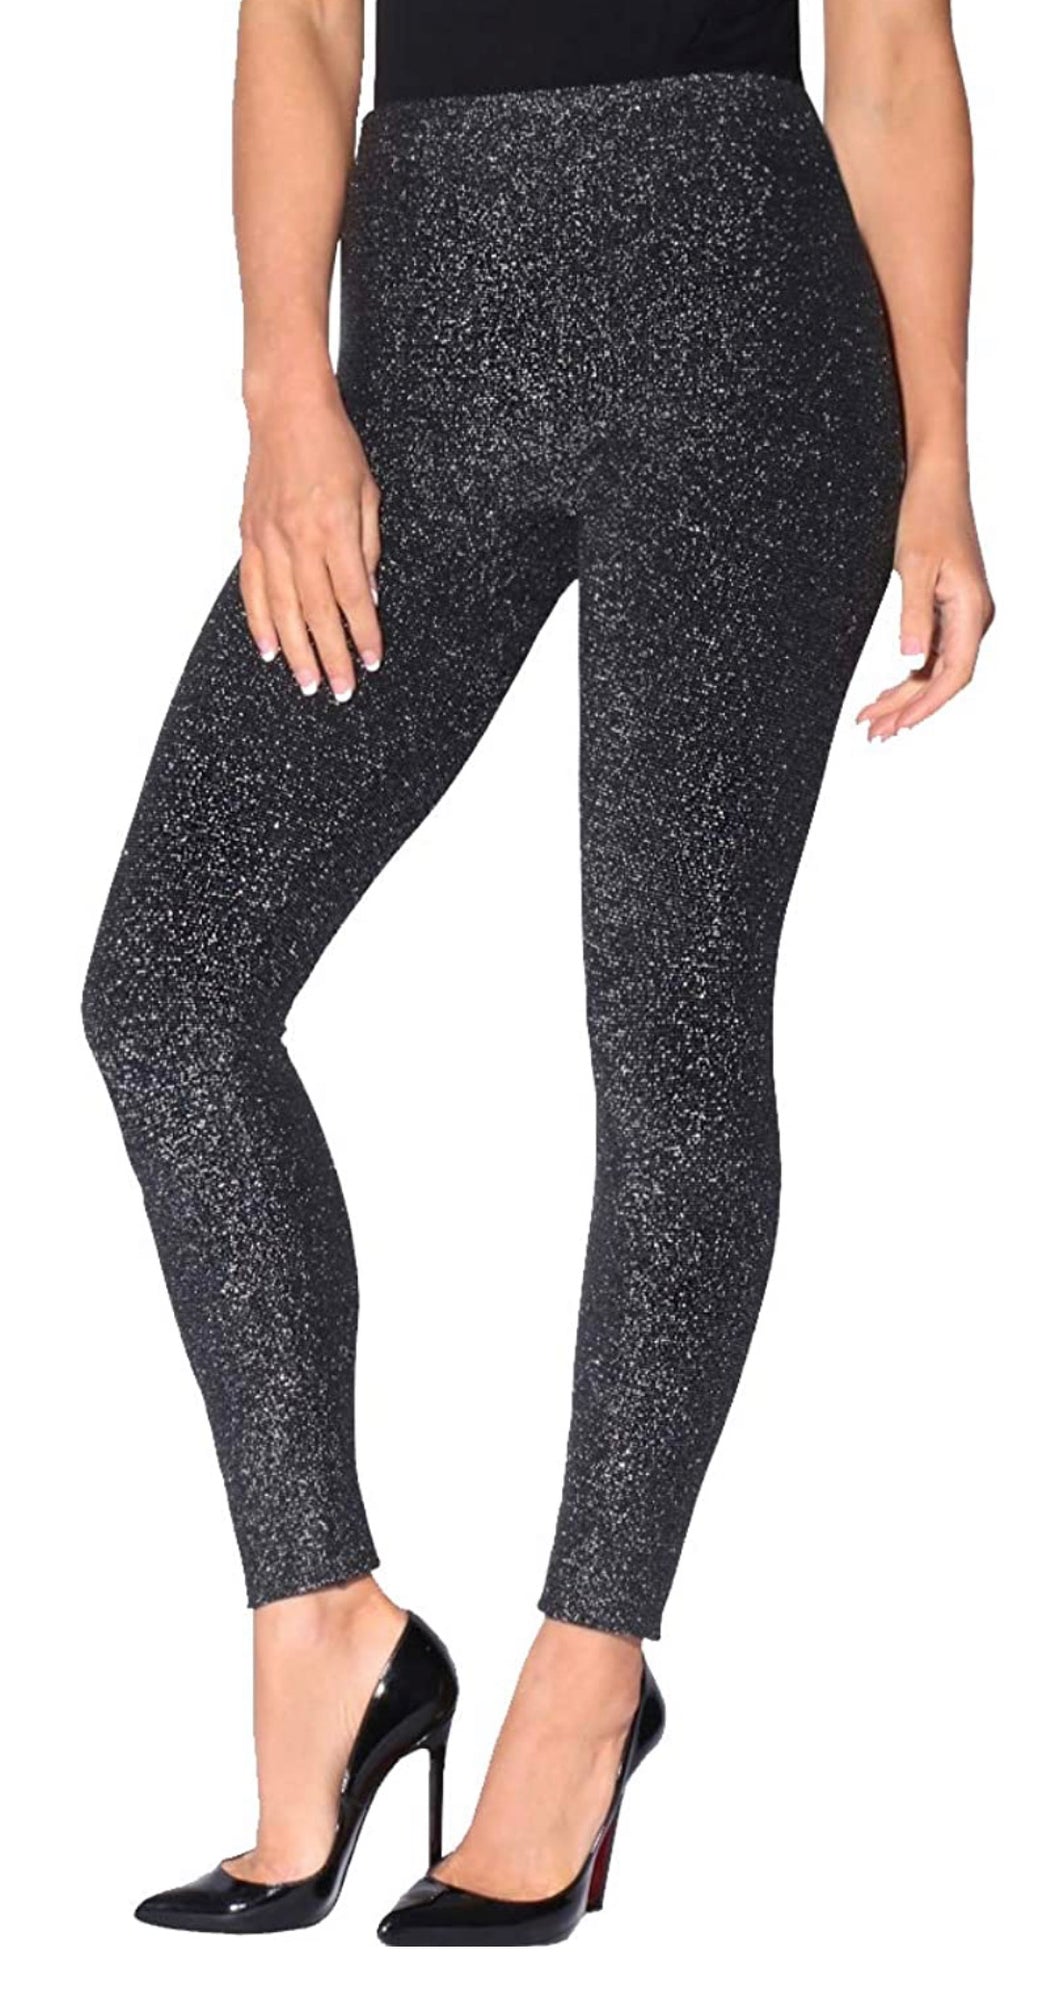 Luxe leggings Black And Silver Snakeskin Print Size small NWOT | Clothes  design, Rose leggings, Black leggings